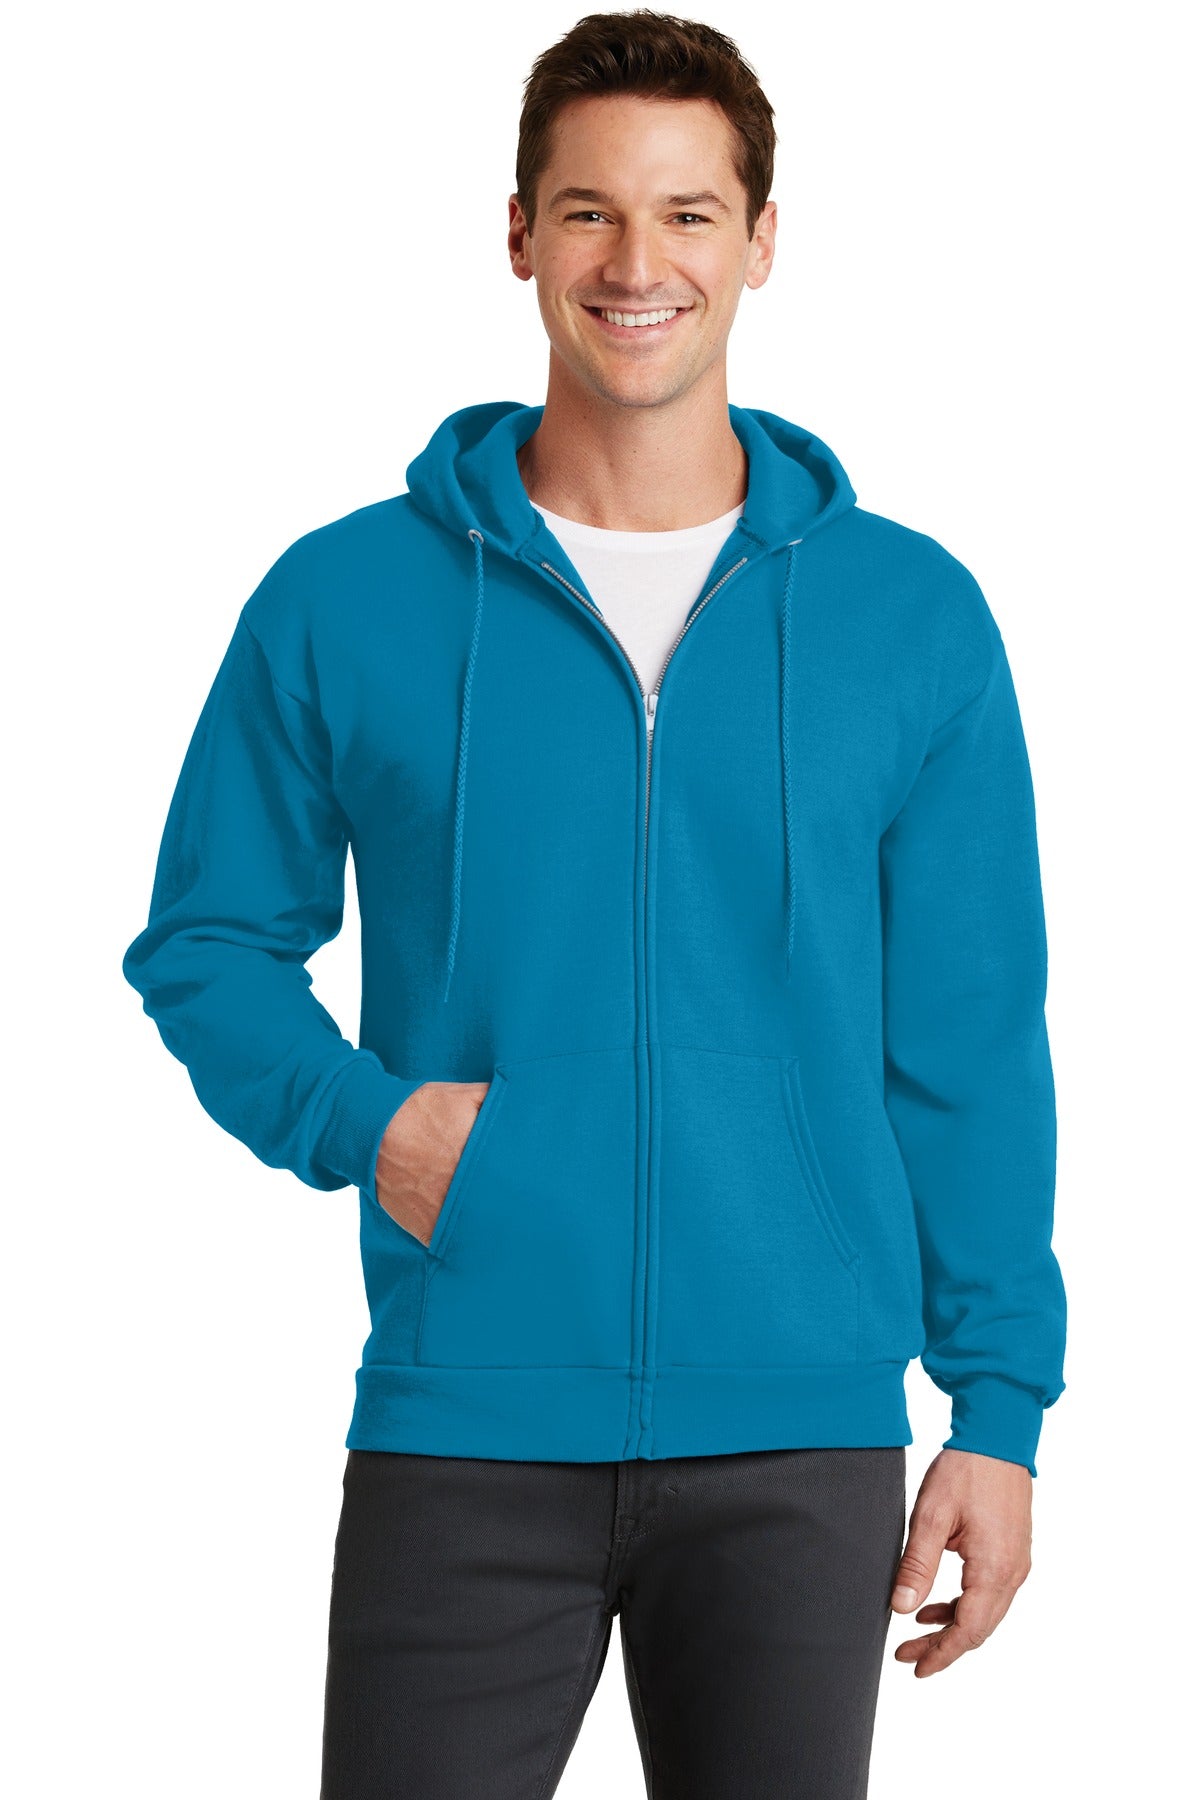 Sweatshirts/Fleece Neon Blue Port & Company